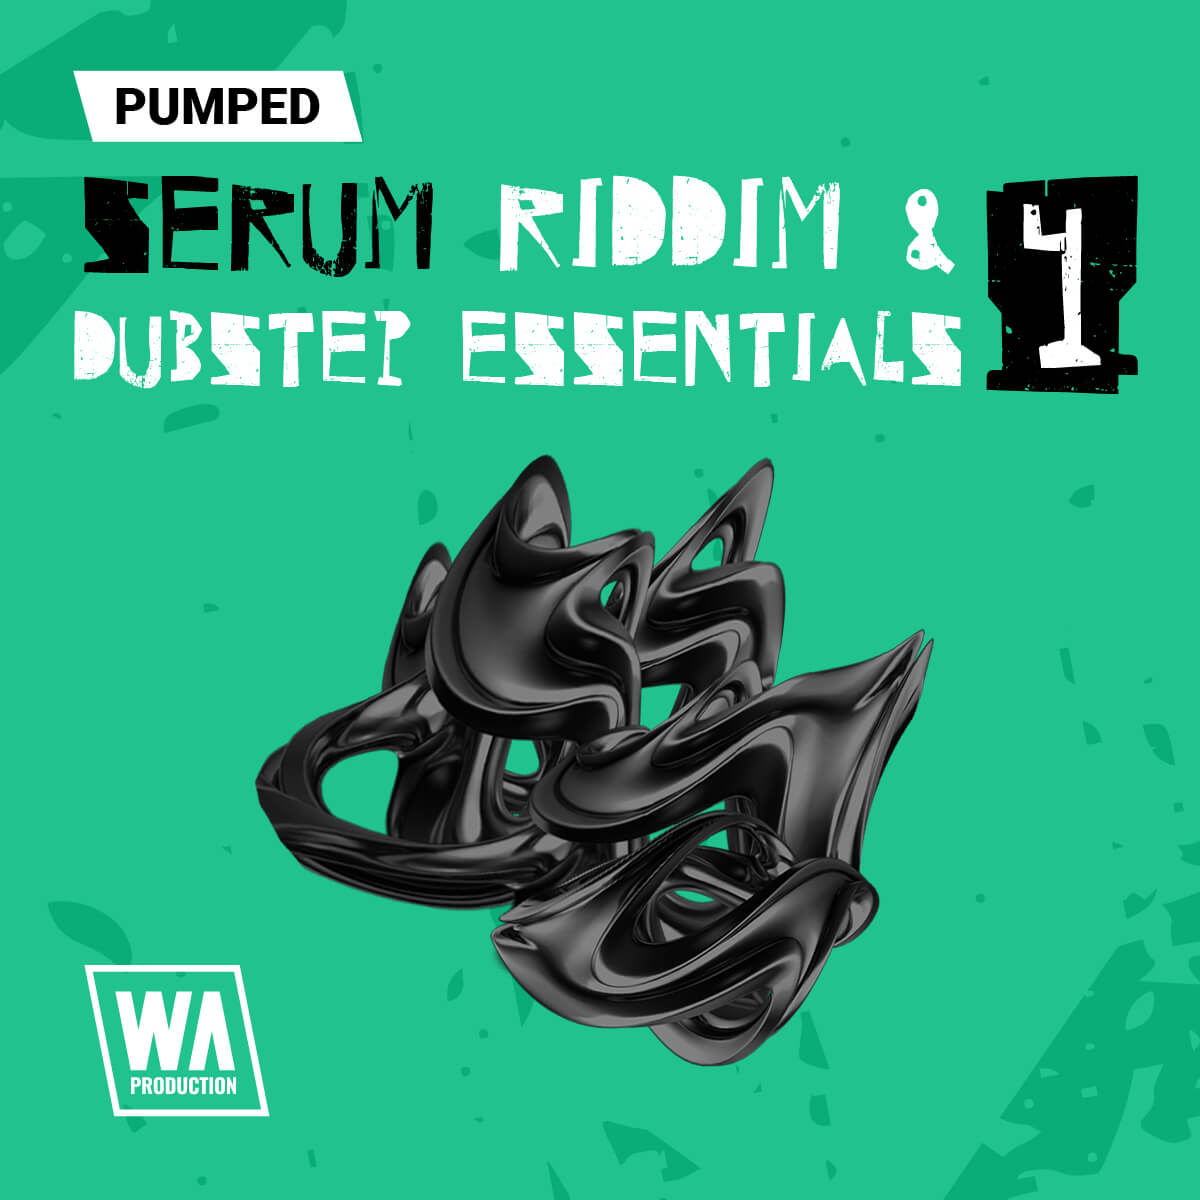 W.A. Production Pumped: Serum Riddim & Dubstep 4 Essentials